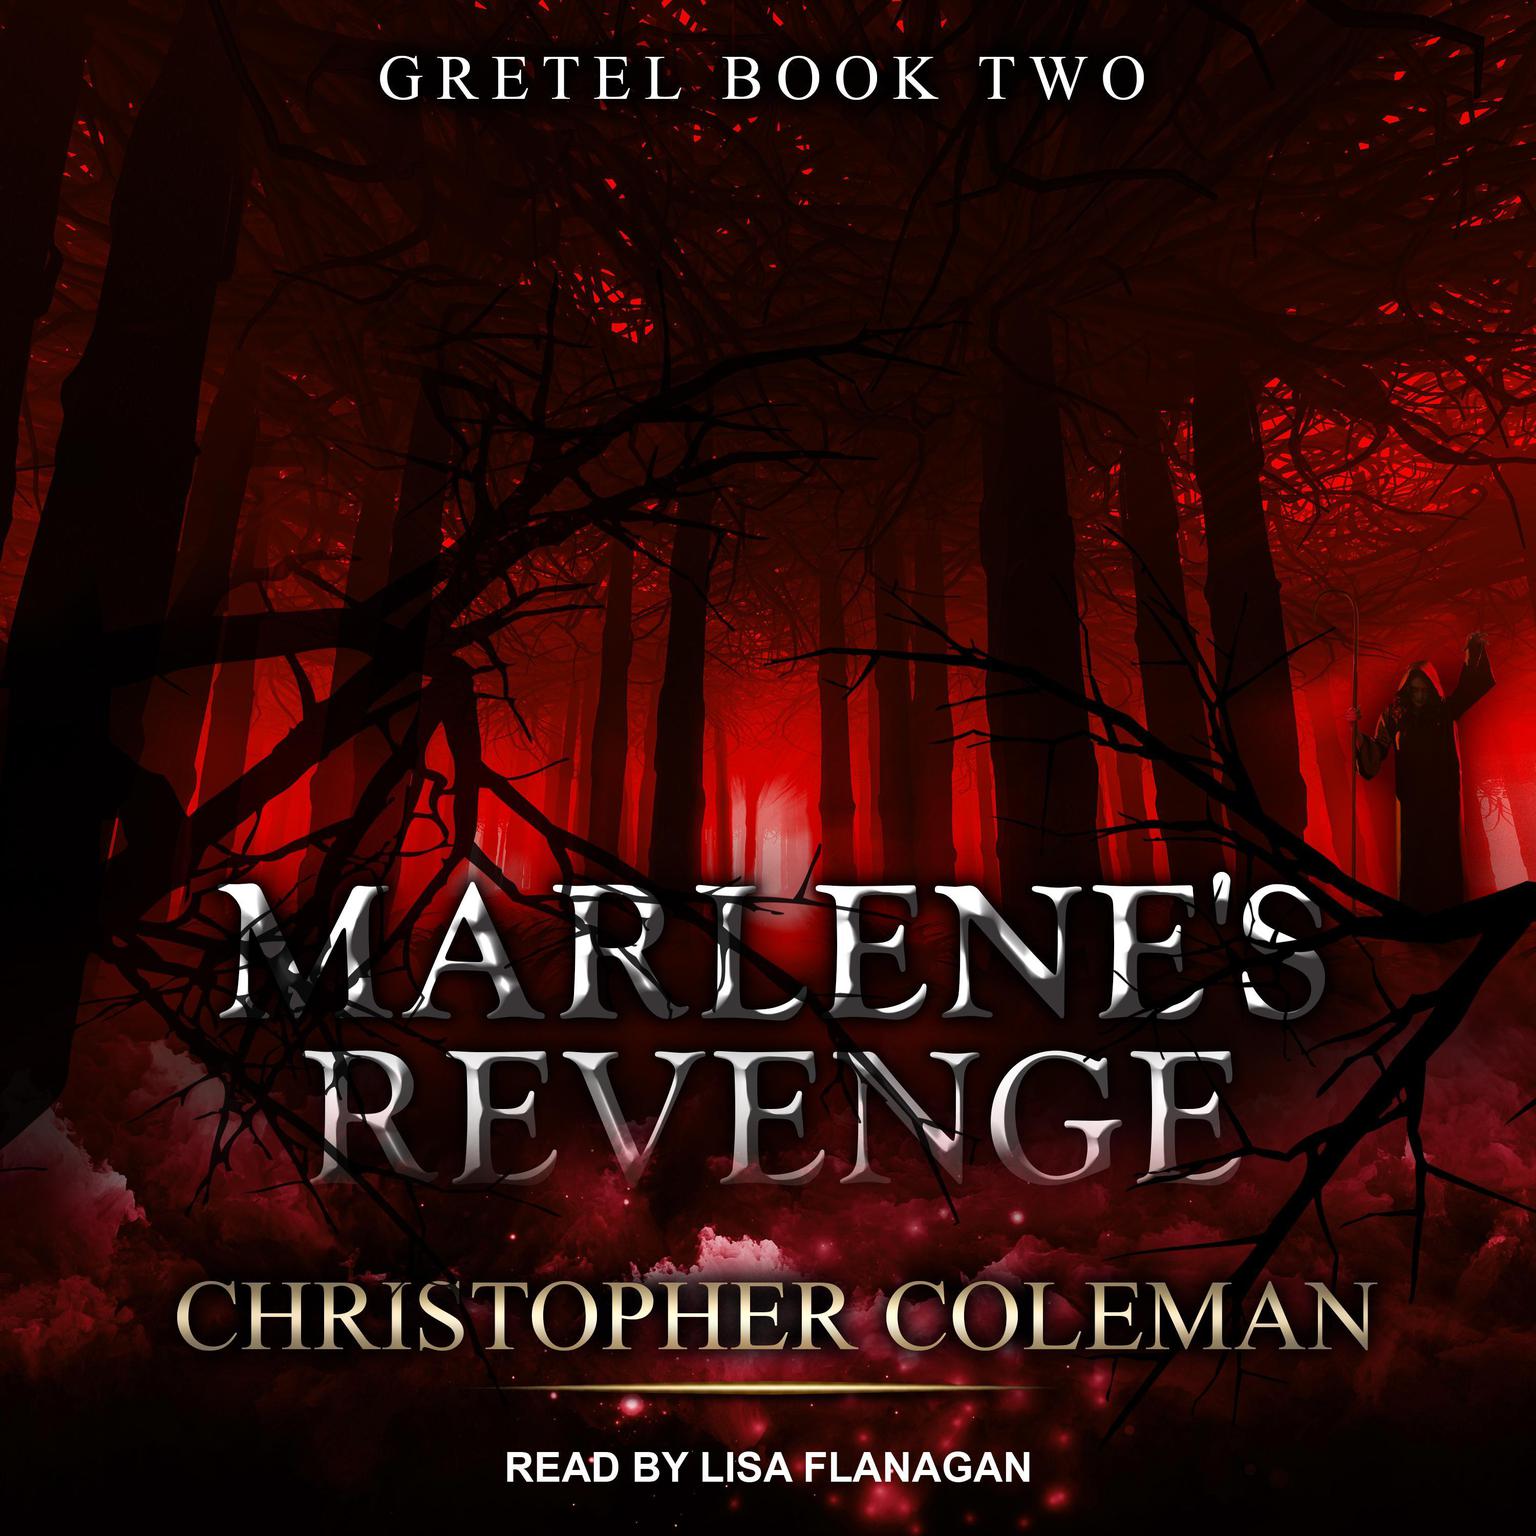 Marlenes Revenge Audiobook, by Christopher Coleman